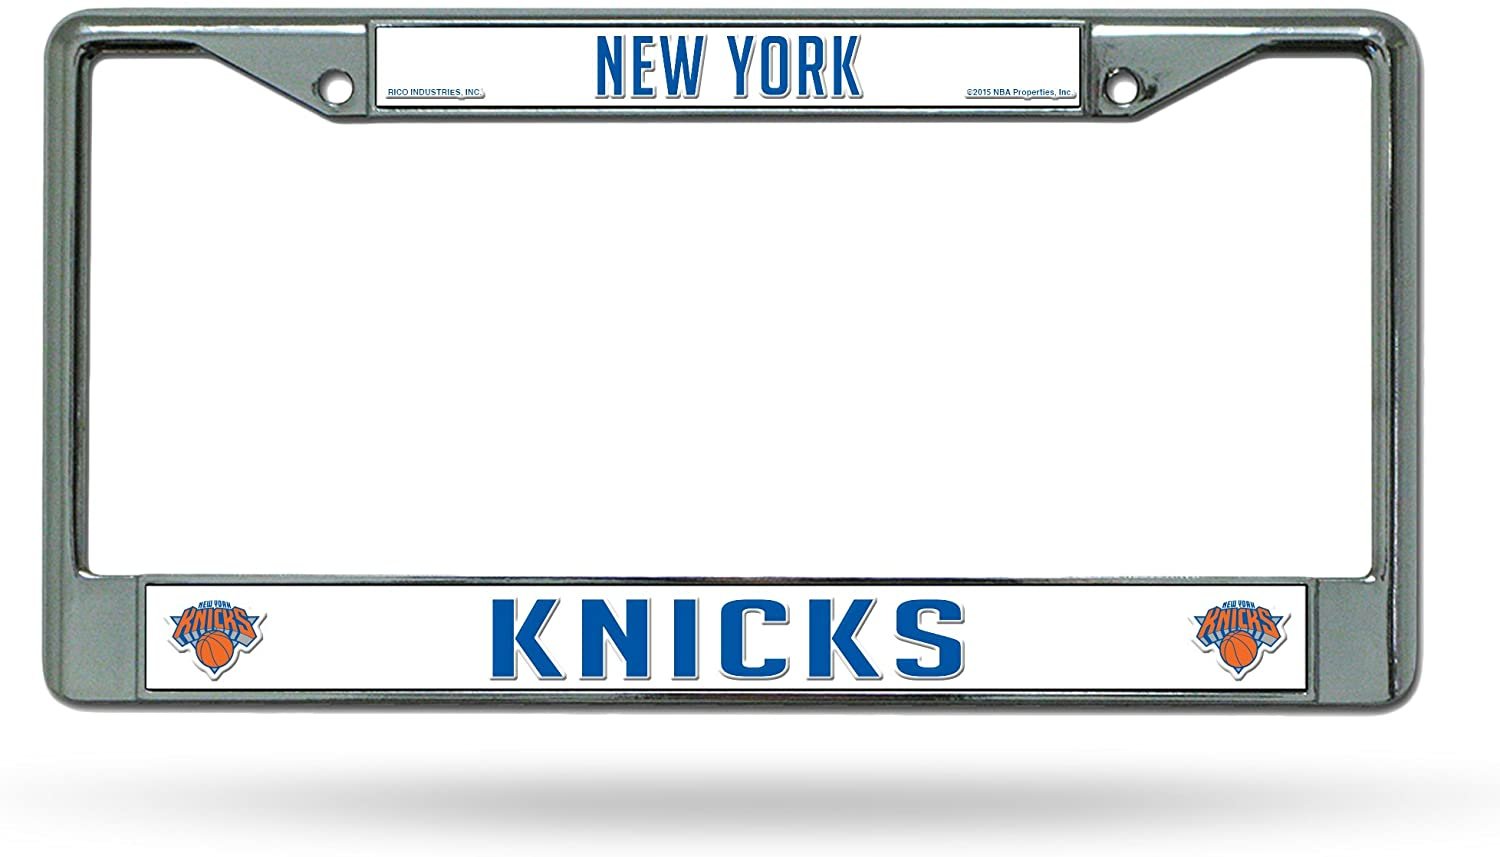 New York Knicks Premium Metal License Plate Frame Chrome Tag Cover, 12x6 Inch